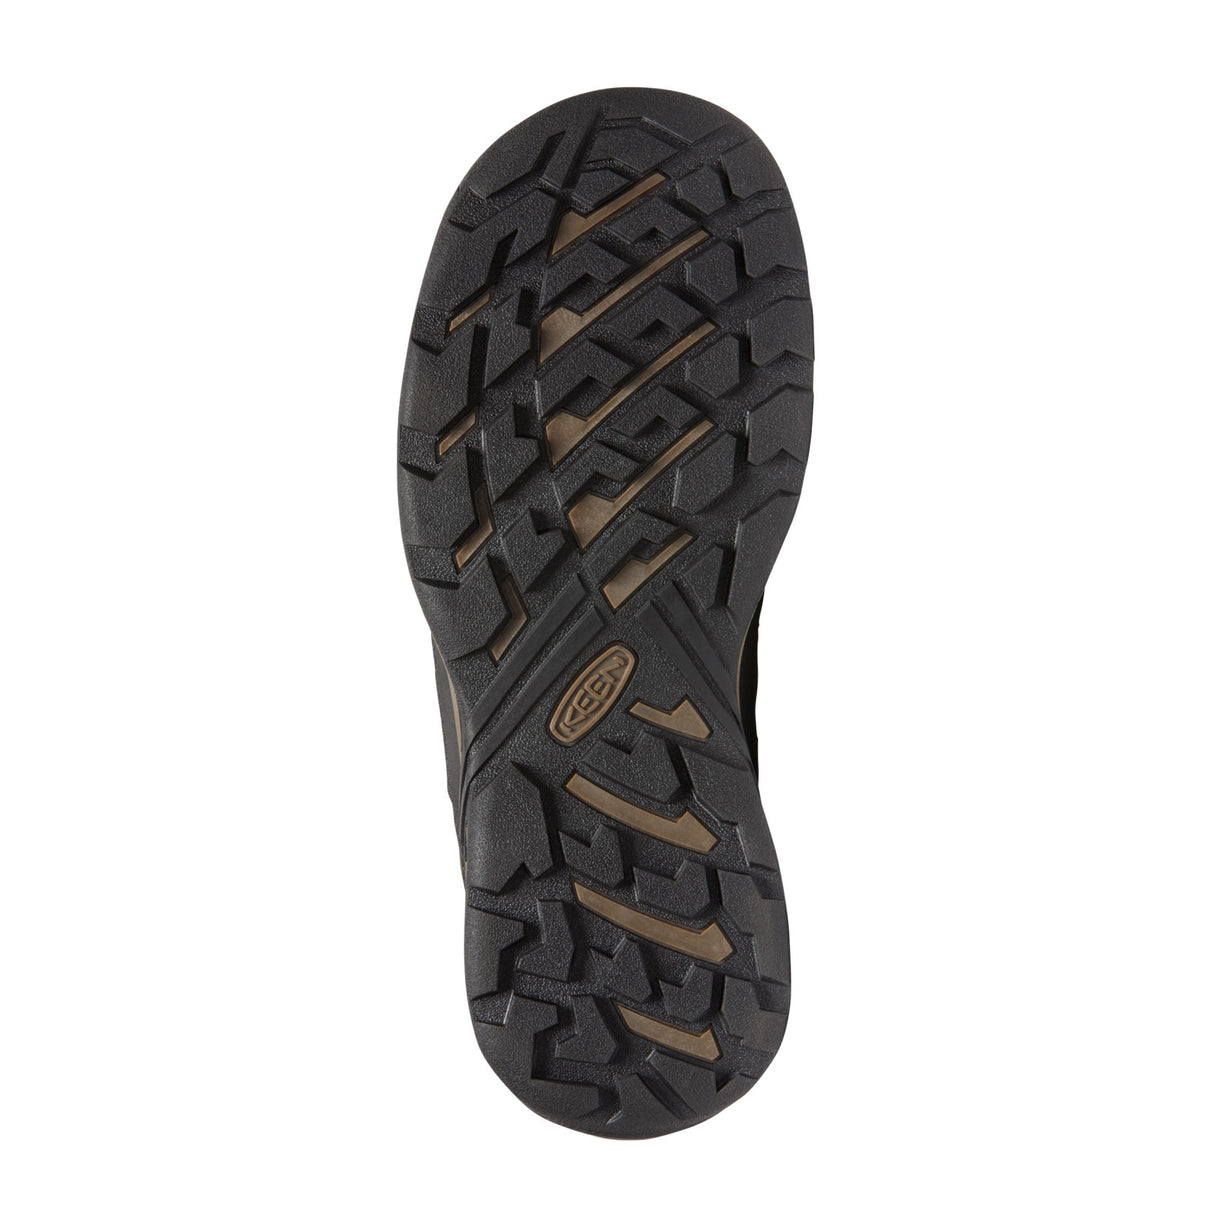 Keen Circadia Waterproof Hiking Shoe (Men) - Black Olive/Potters Clay Hiking - Low - The Heel Shoe Fitters